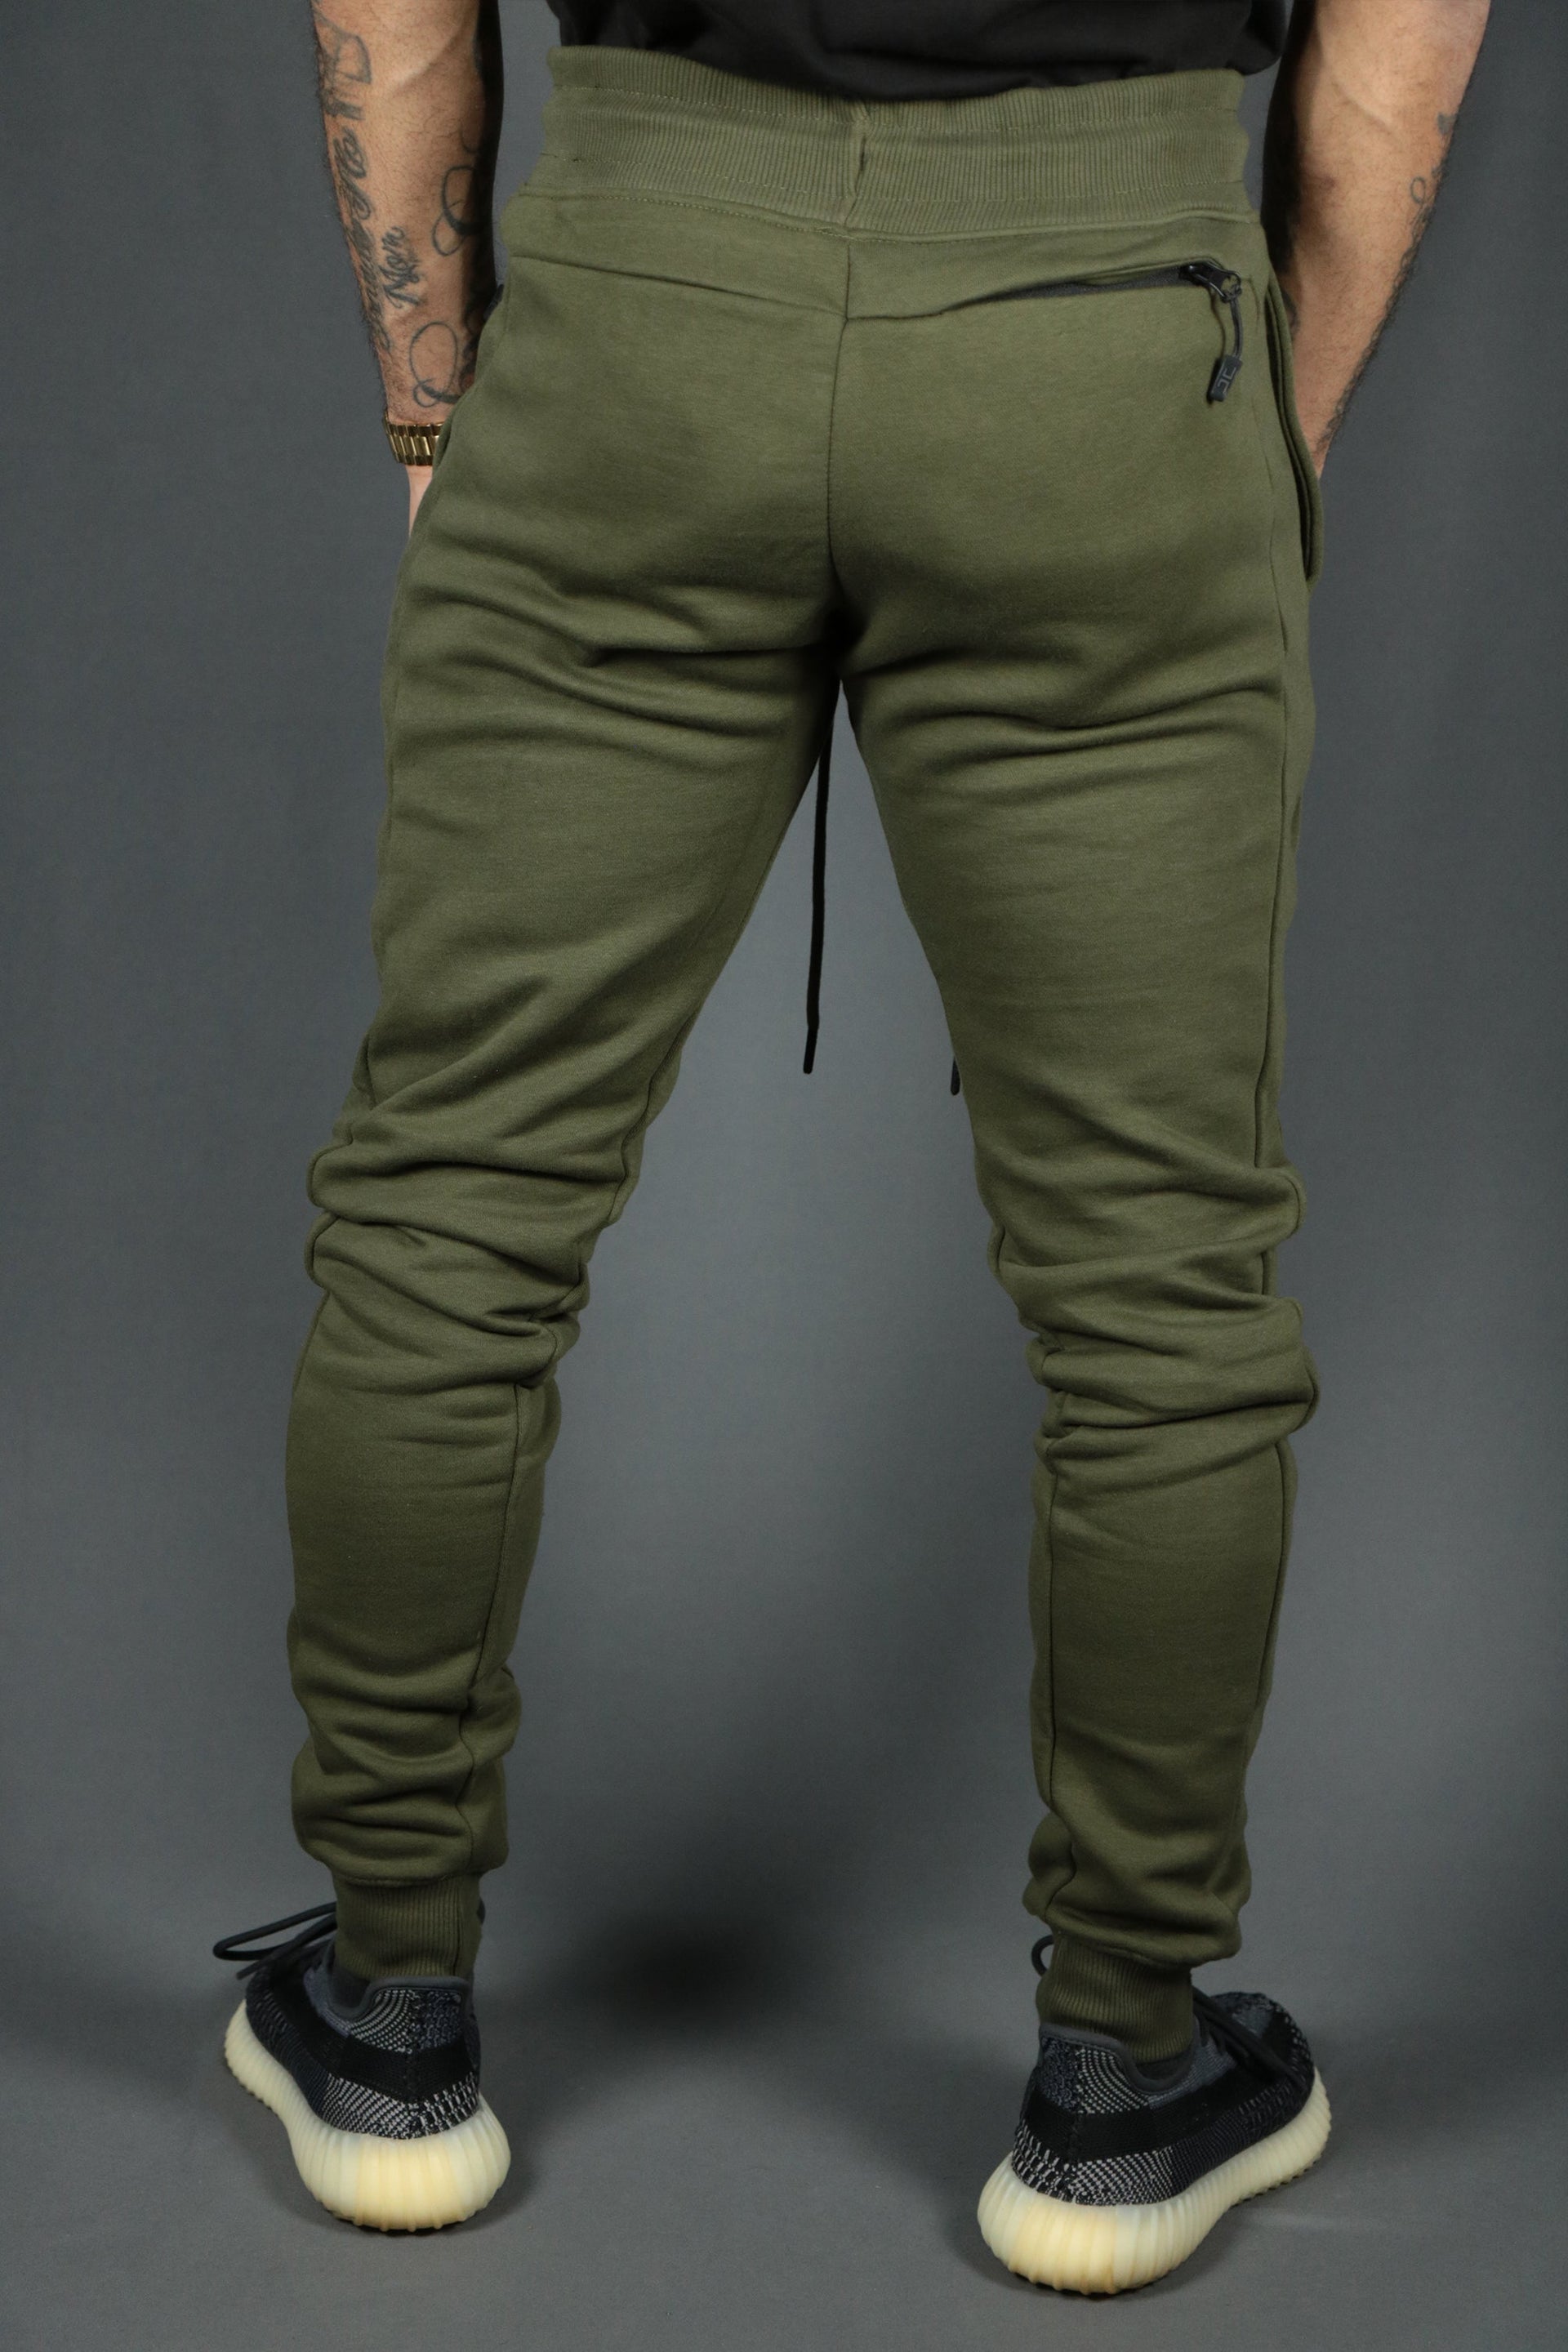 The backside of the Jordan Craig military green sweatpants set.